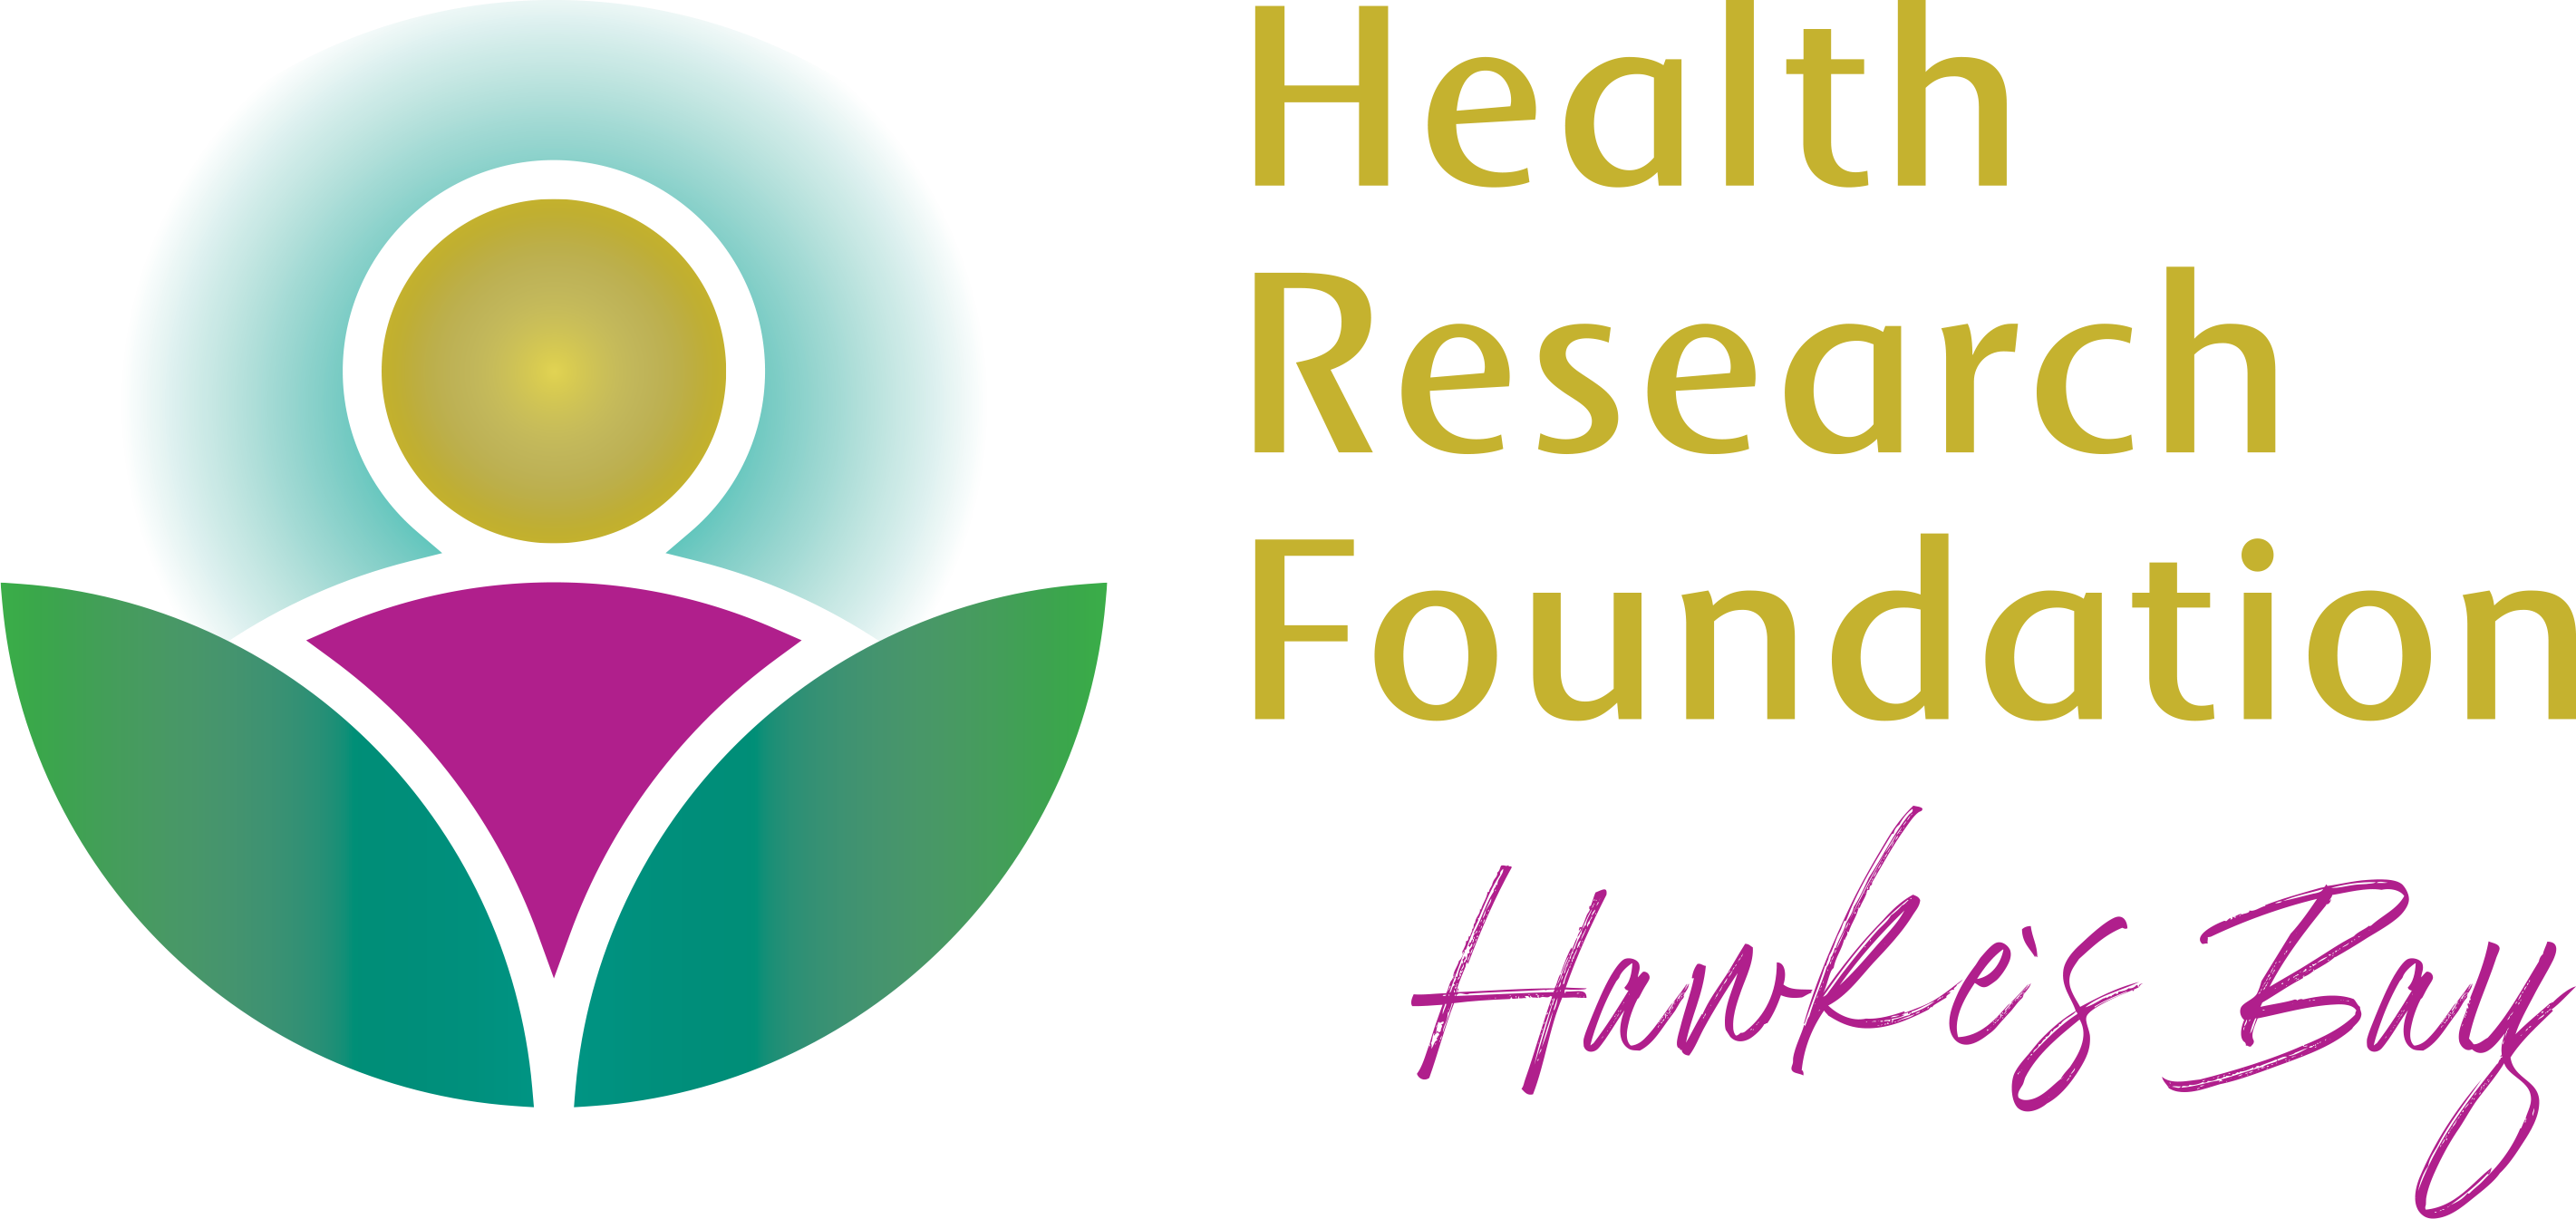 HEALTH RESEARCH FOUNDATION – HAWKES BAY